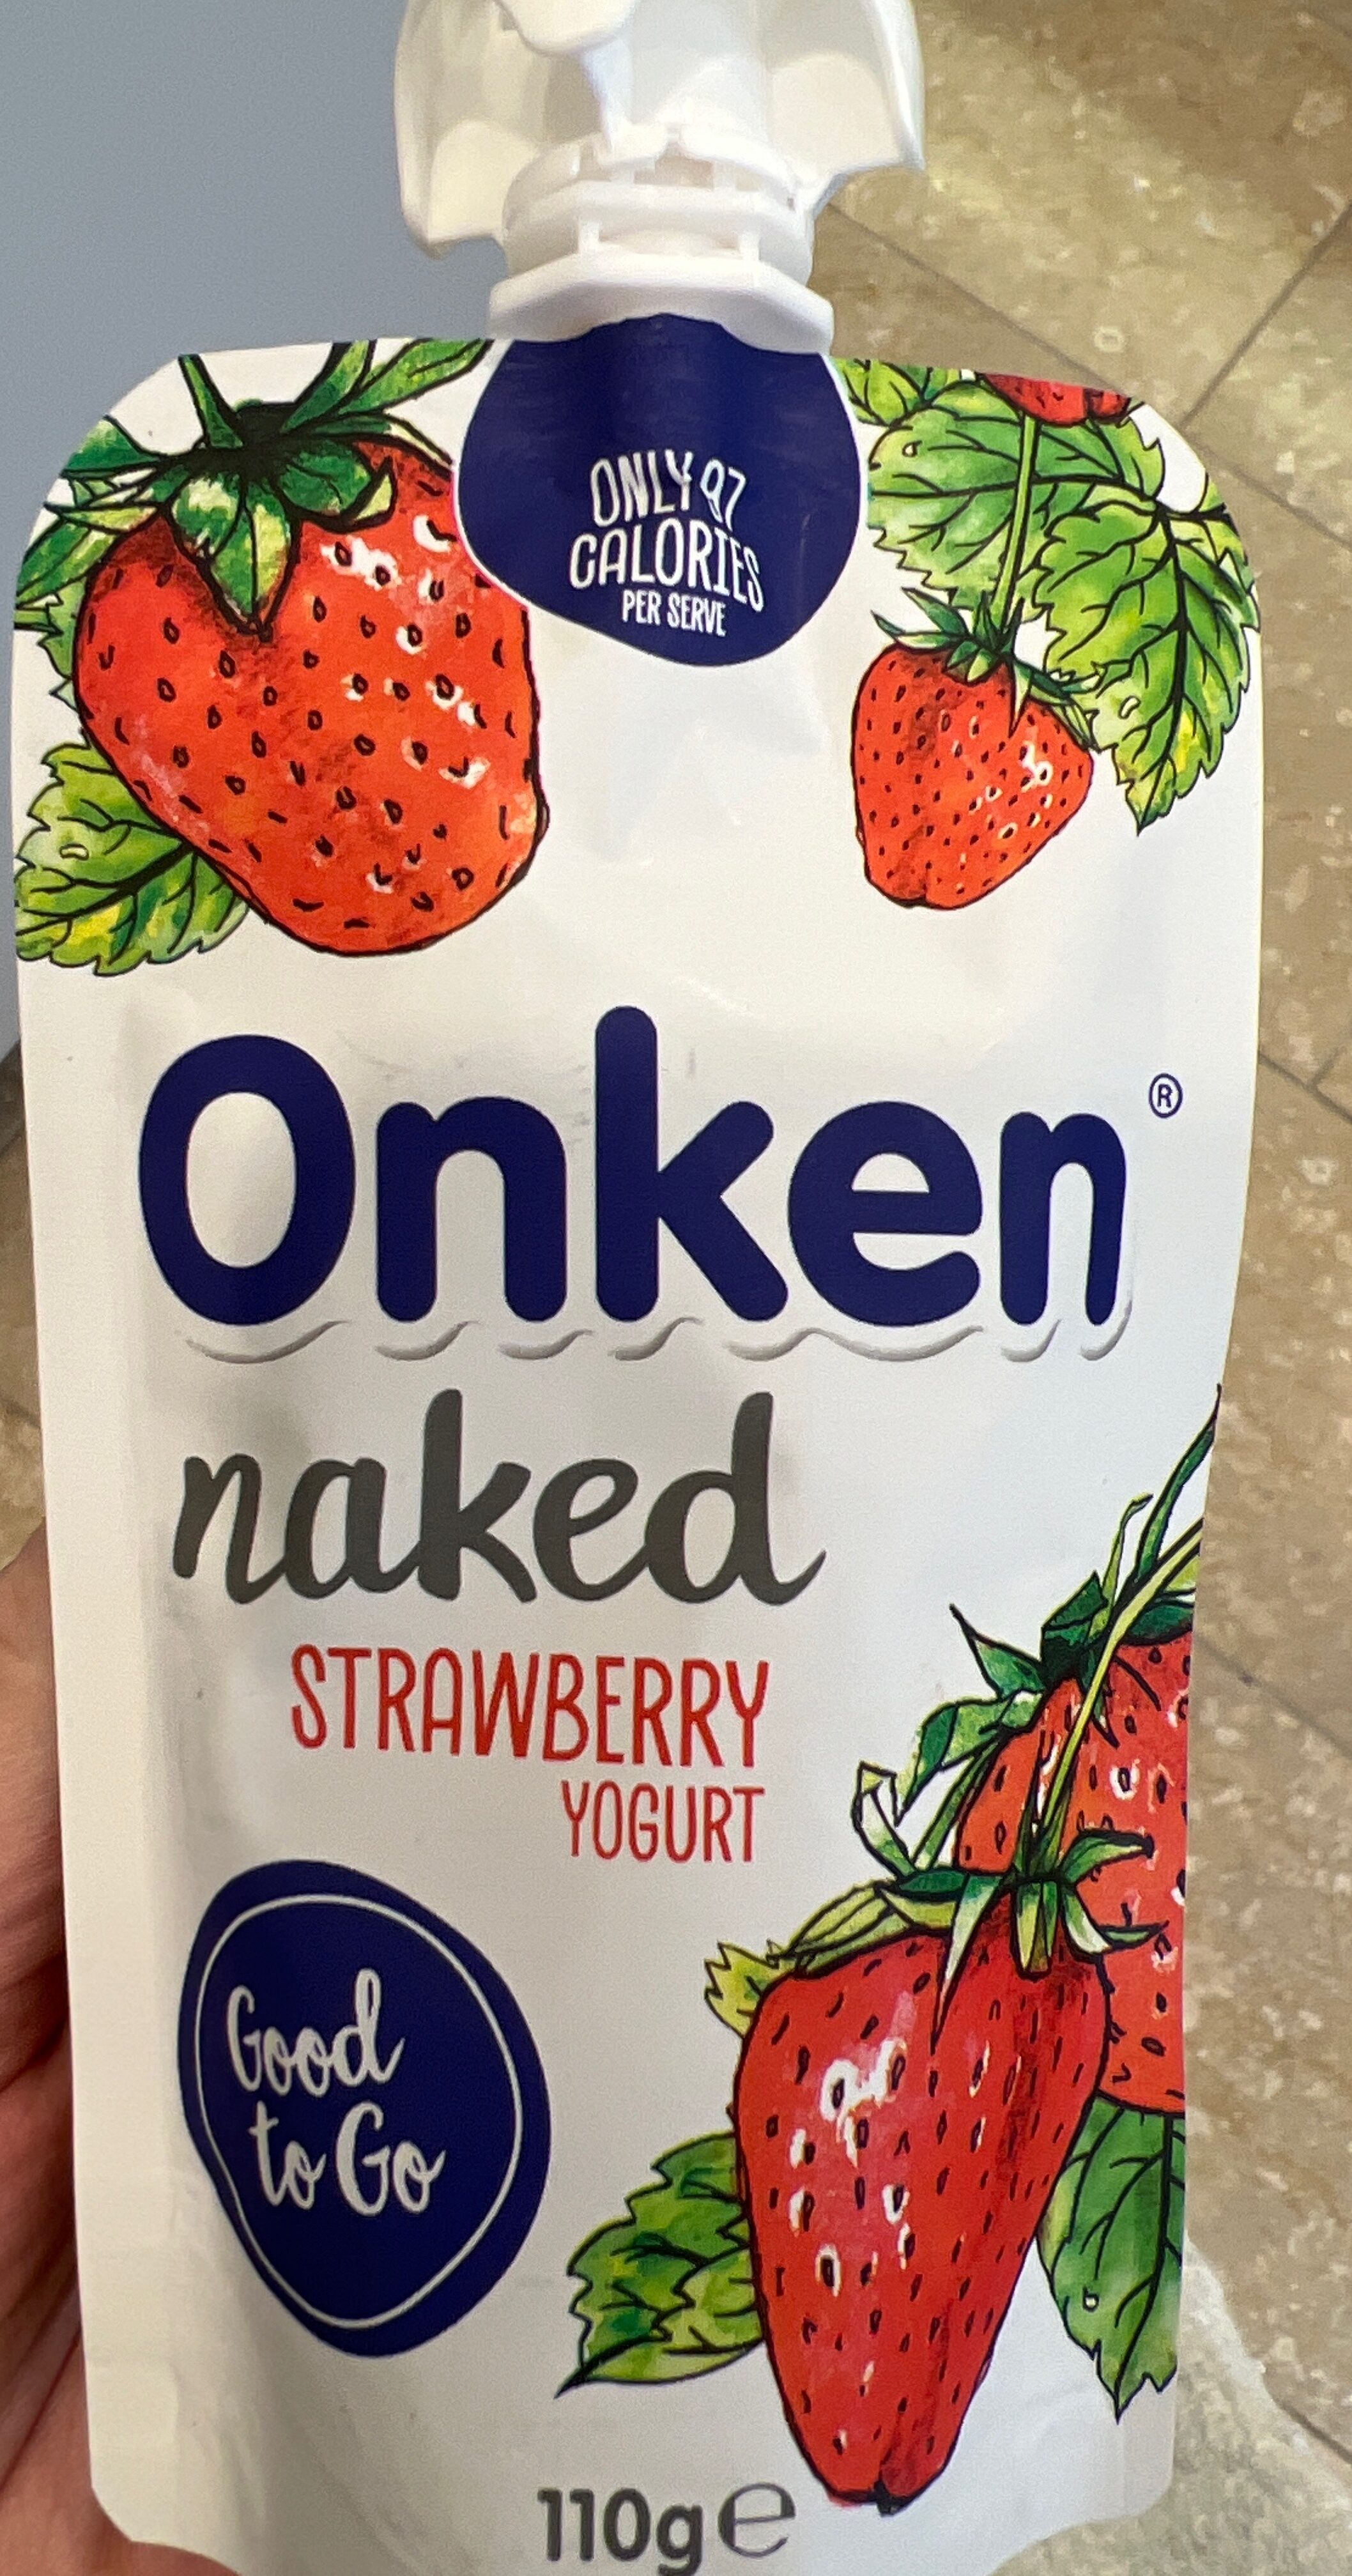 Naked strawberry yogurt - Produit - en